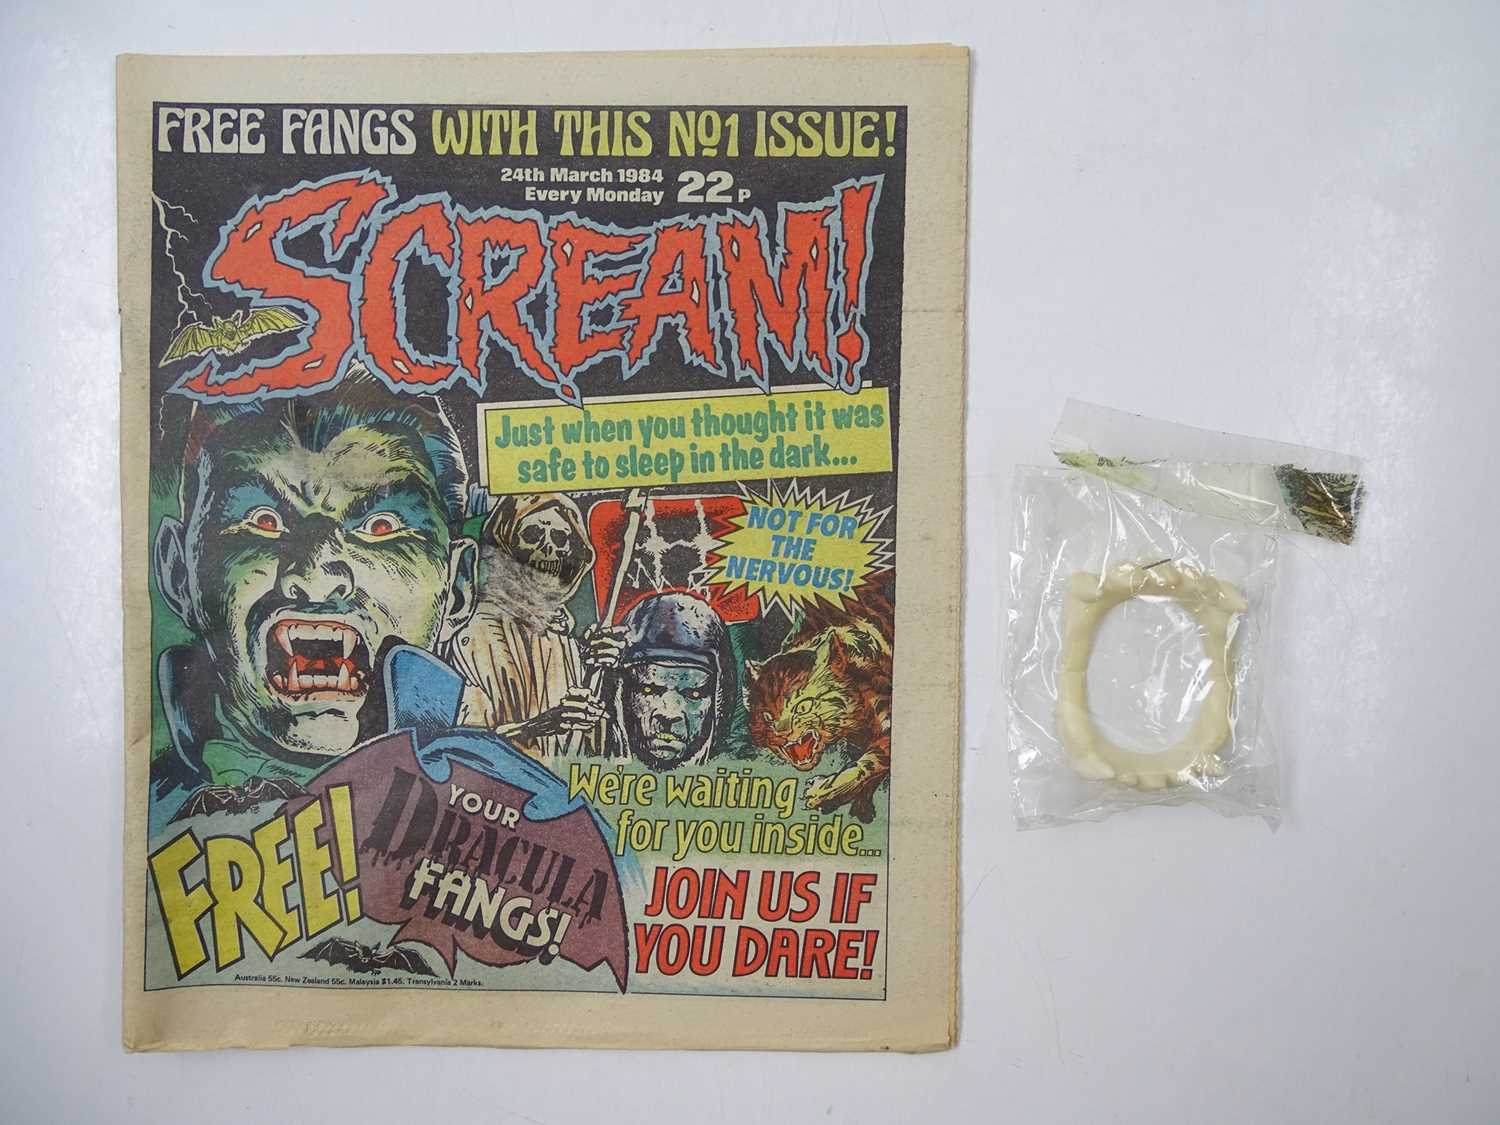 Lot 33 - SCREAM #1 - (1984 - IPC) - Dated March 24th -...